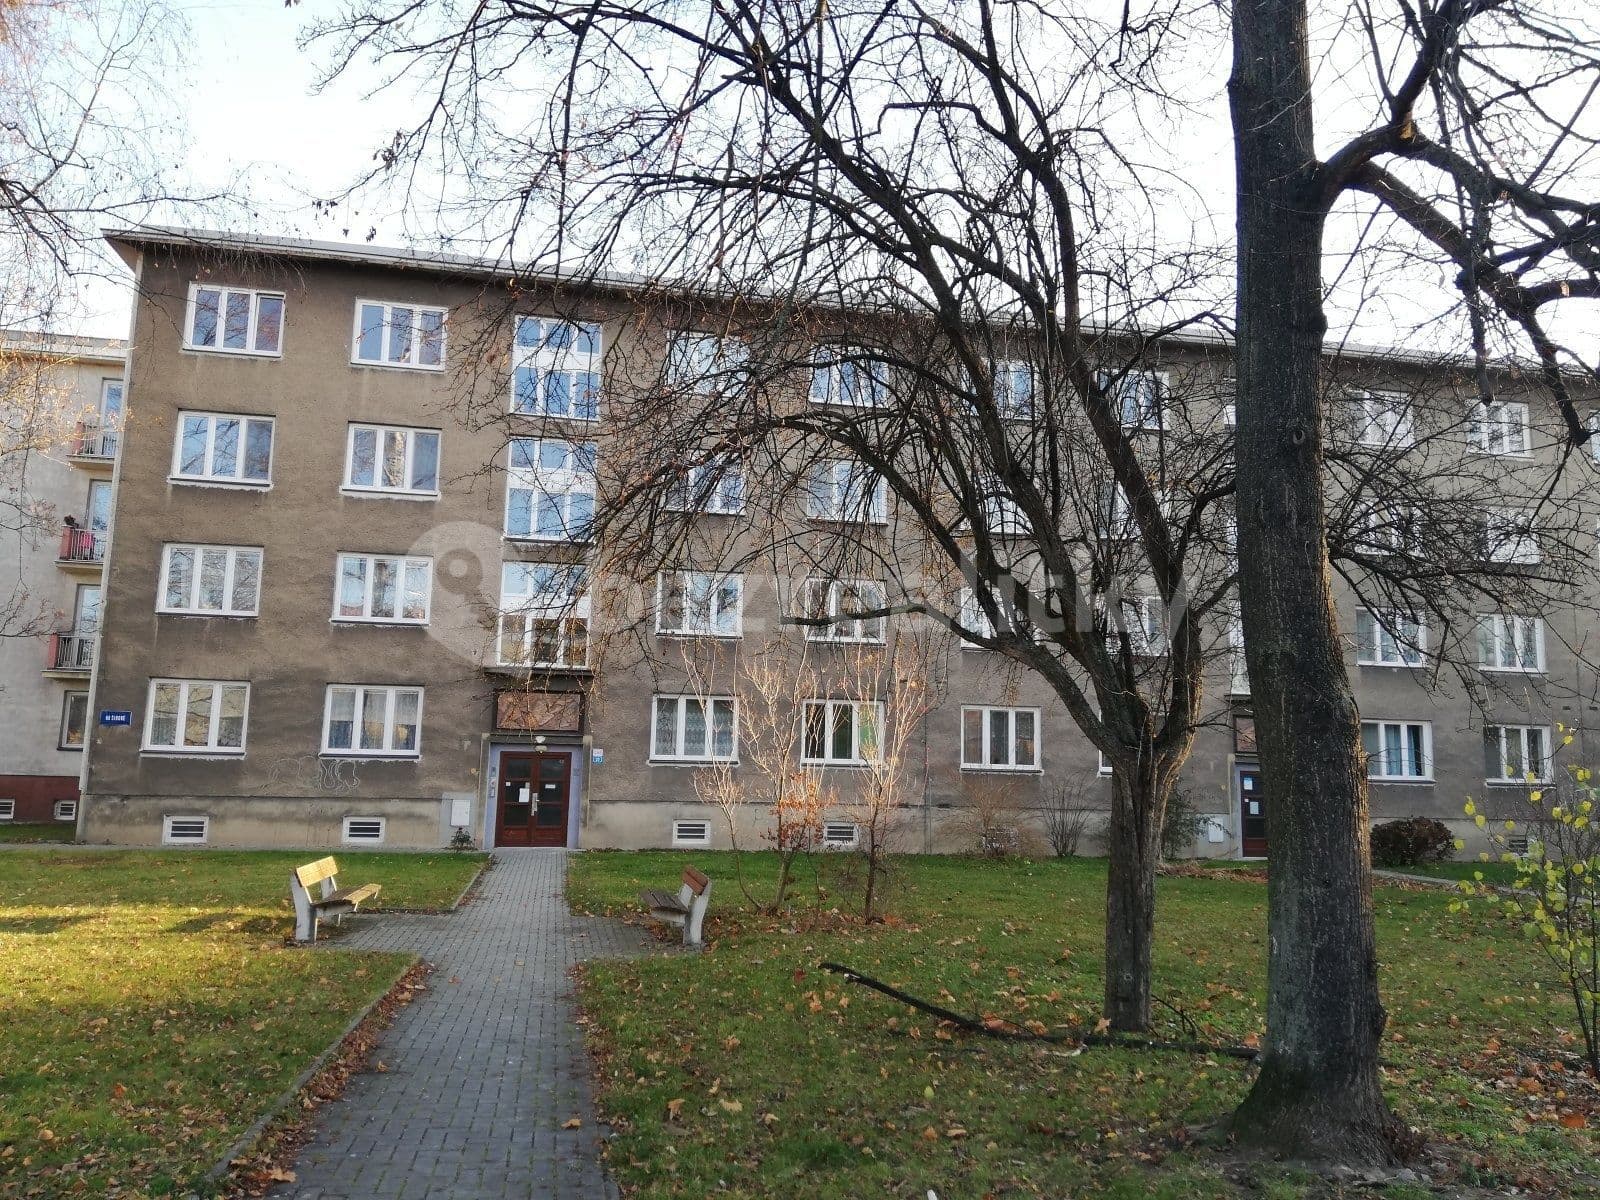 2 bedroom flat to rent, 56 m², Na Široké, Ostrava, Moravskoslezský Region